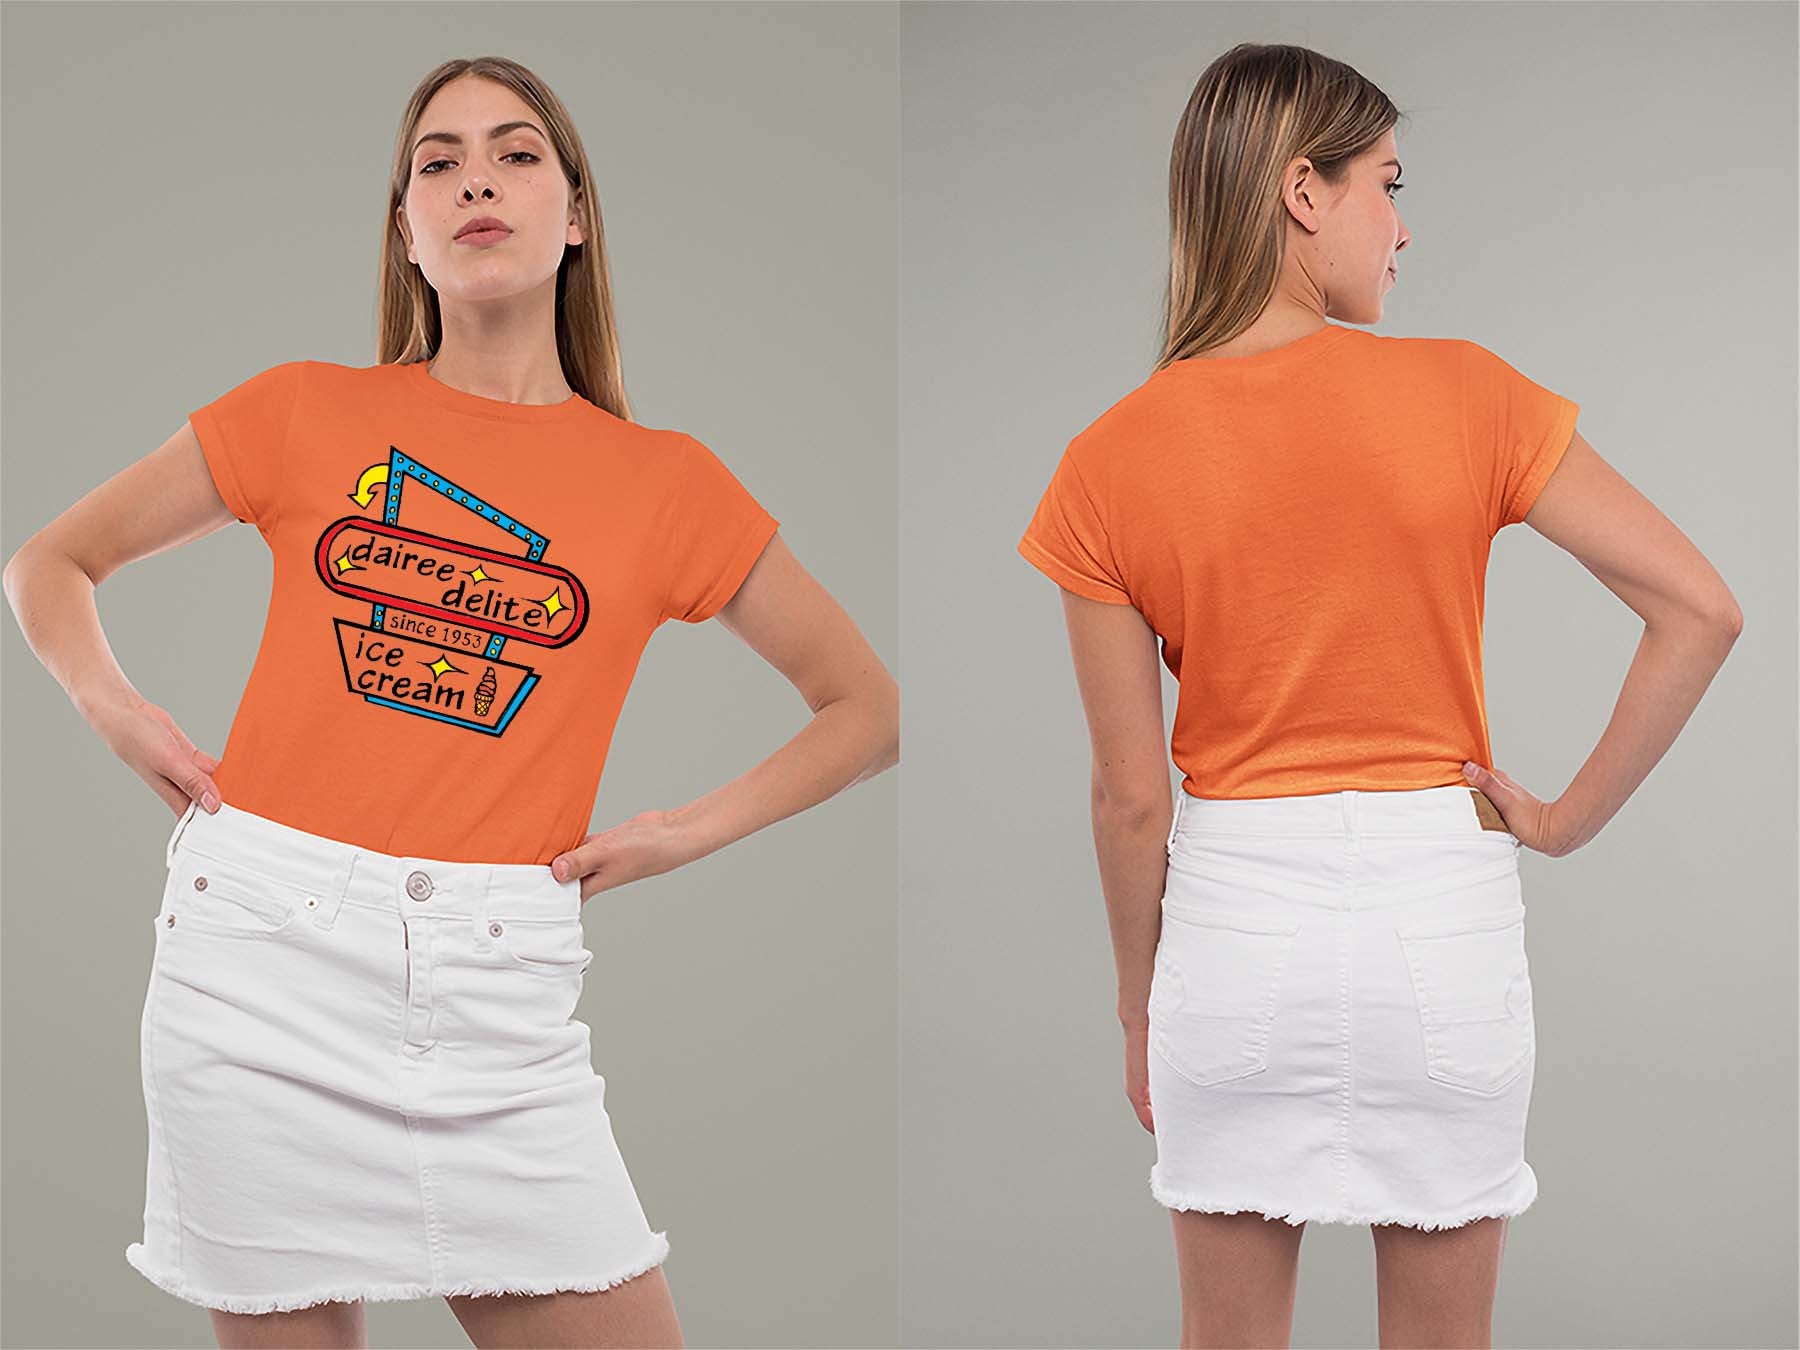 70th Anniversary Retro Sign 2 Ladies Crew (Round) Neck Shirt Small Orange